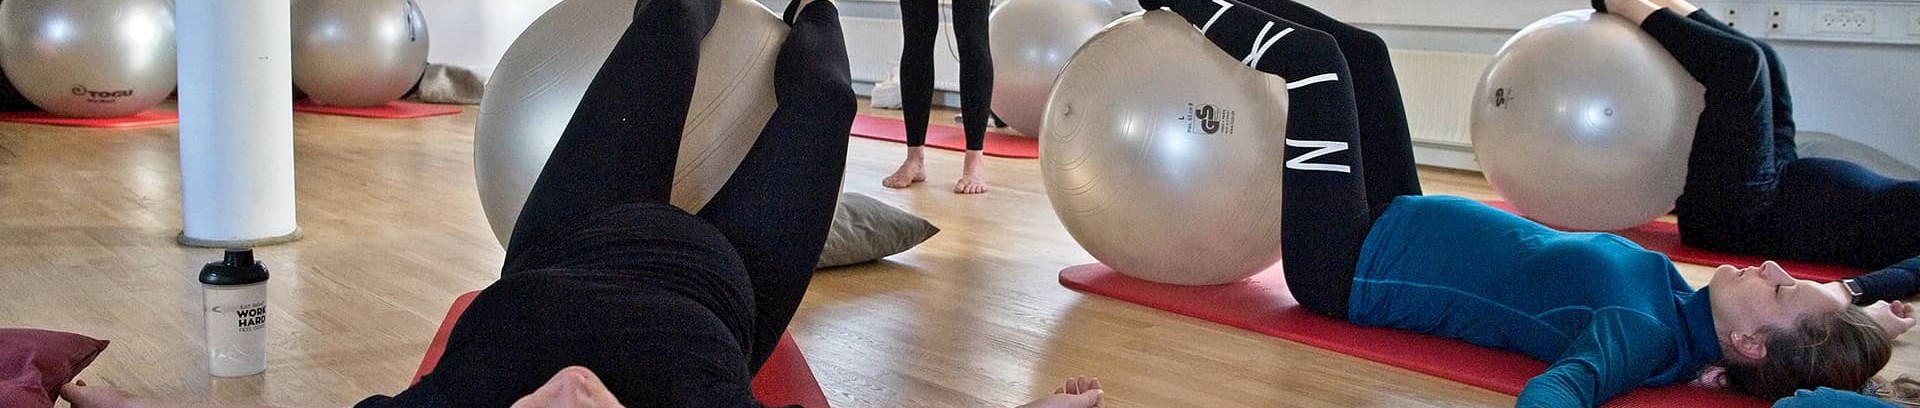 Undervisning i yoga og pilates for gravide ved FOF Aarhus, underviser Mette Axel Petersen